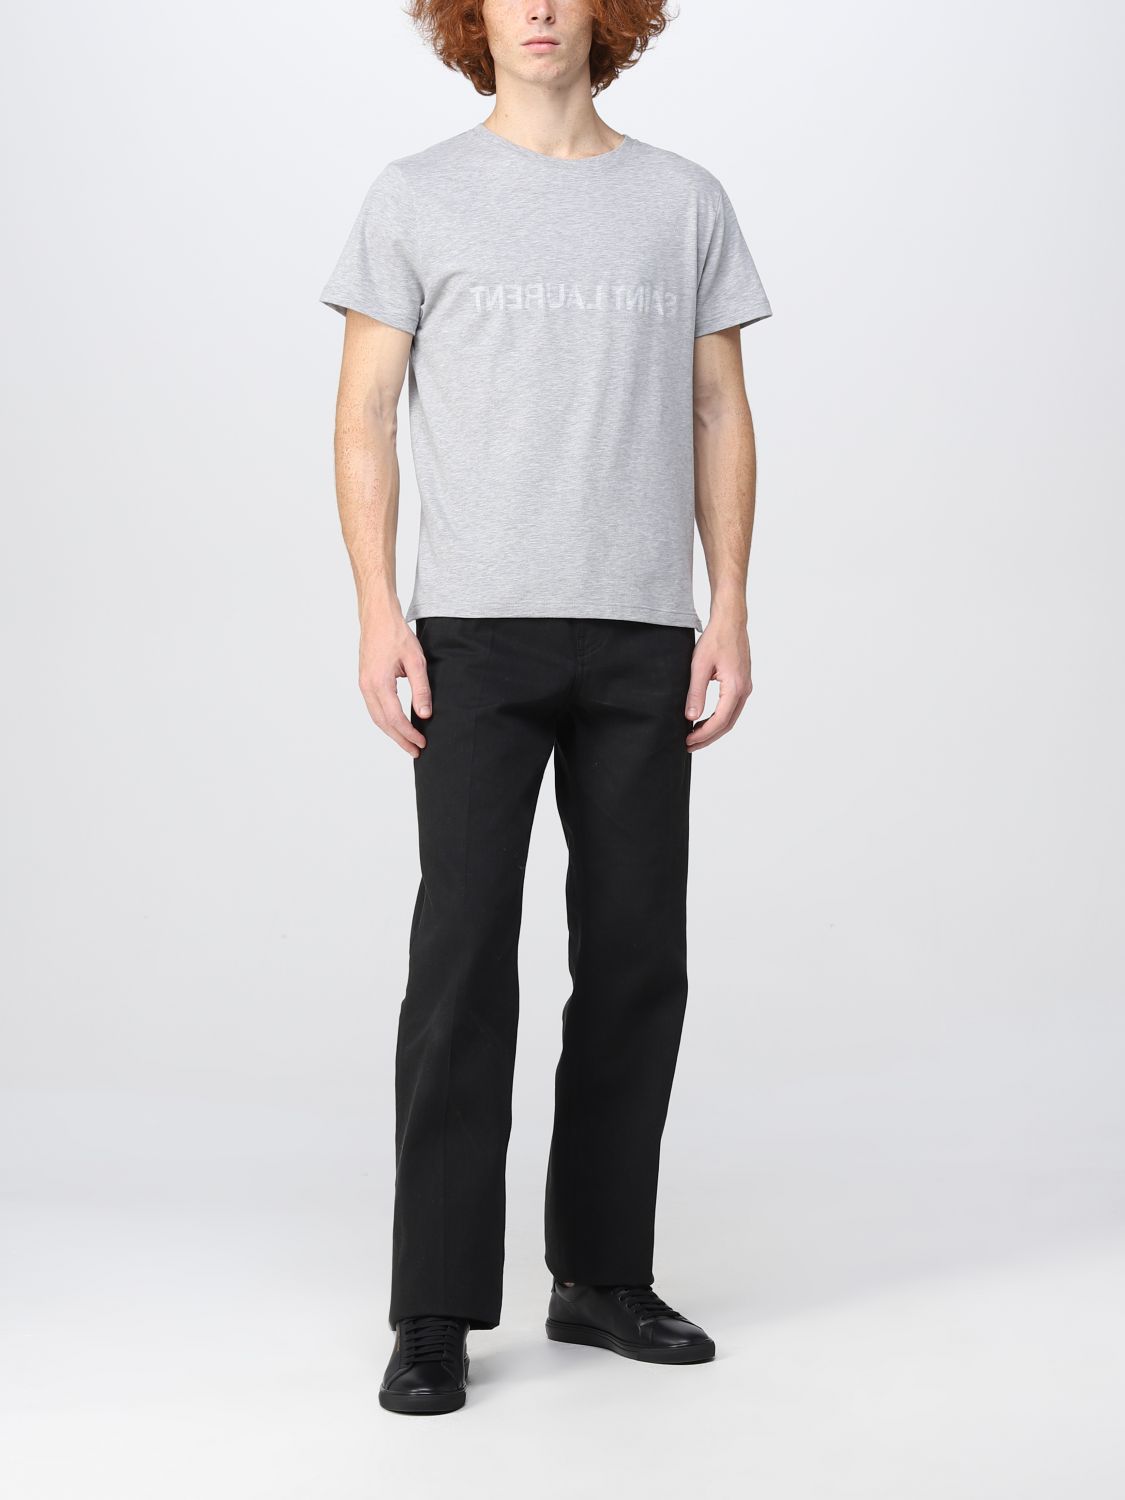 T-Shirt Saint Laurent: Saint Laurent Herren T-Shirt grau 2